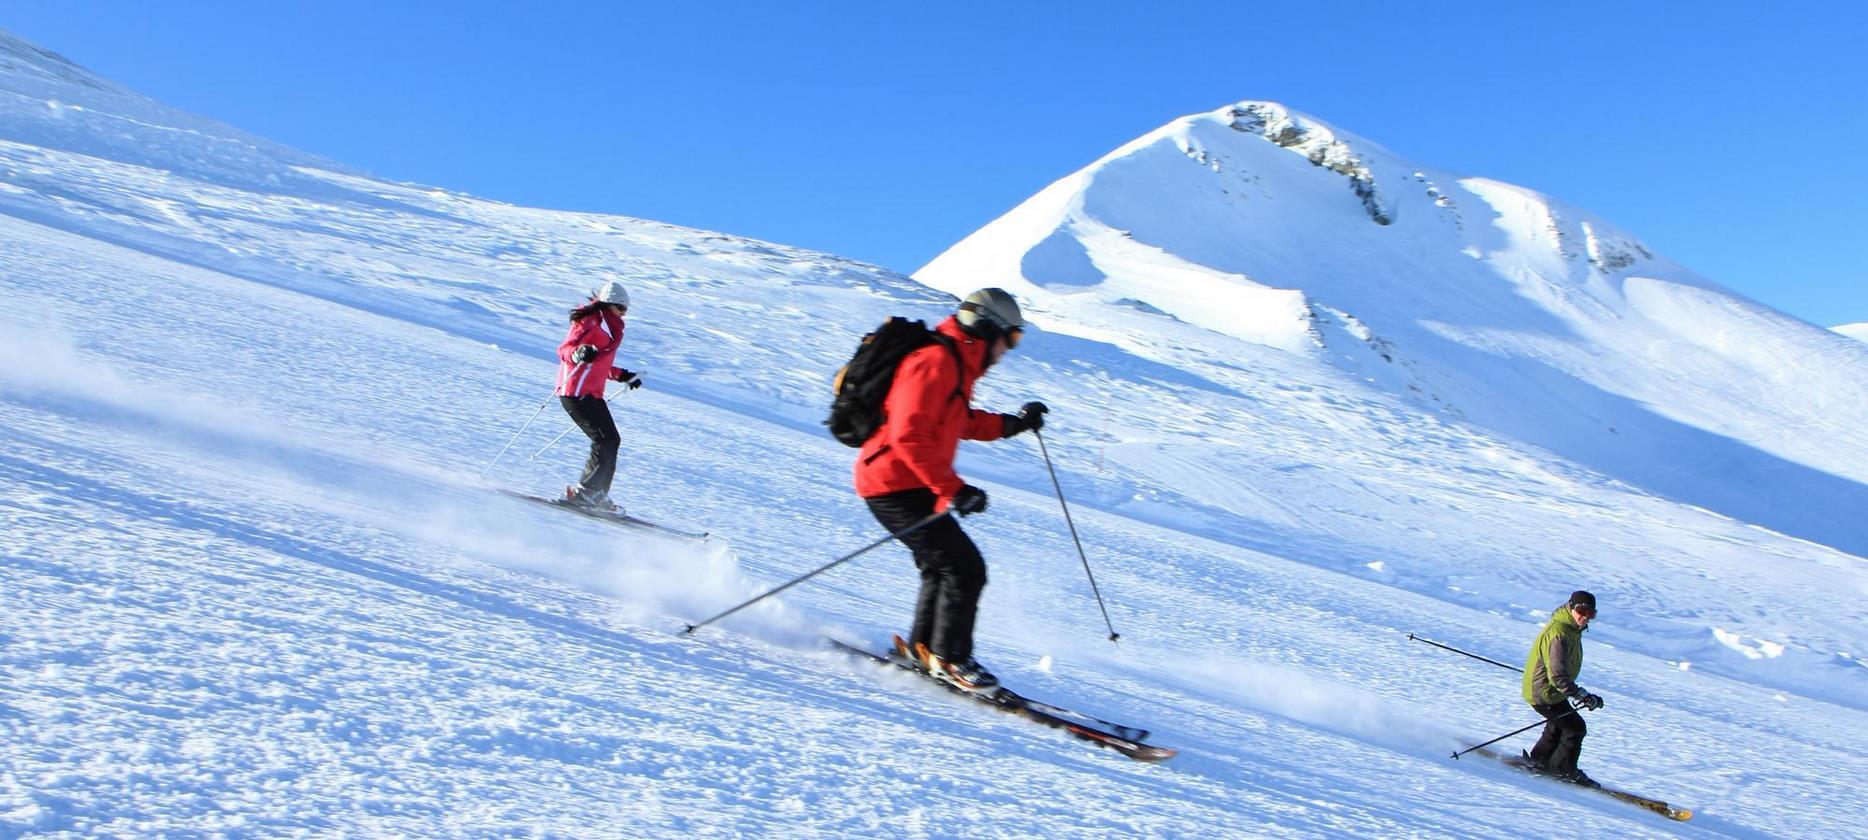 Super Besse - On the slopes of the Mont Dore ski slopes